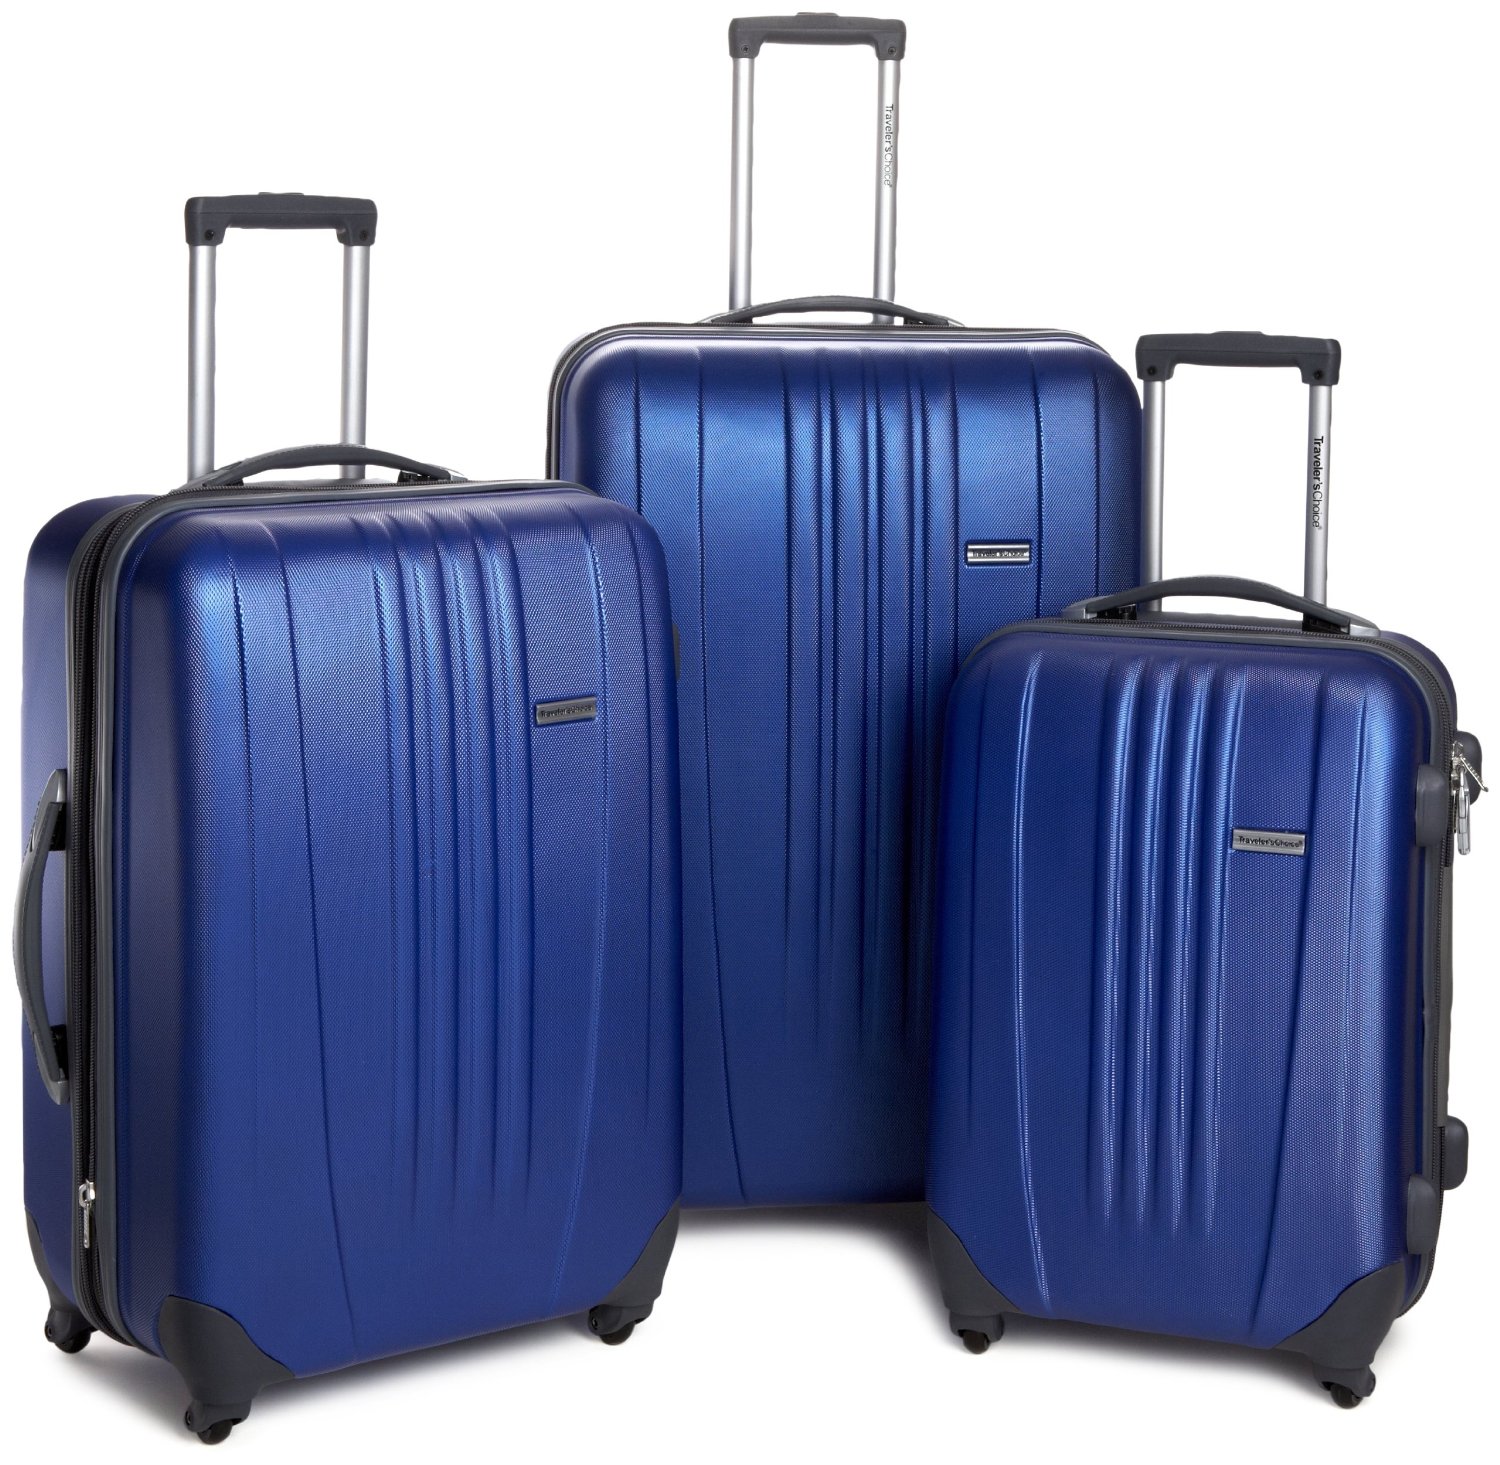 Traveler's Choice Luggage Toronto Three Piece Hardside Spinner Luggage $86.39